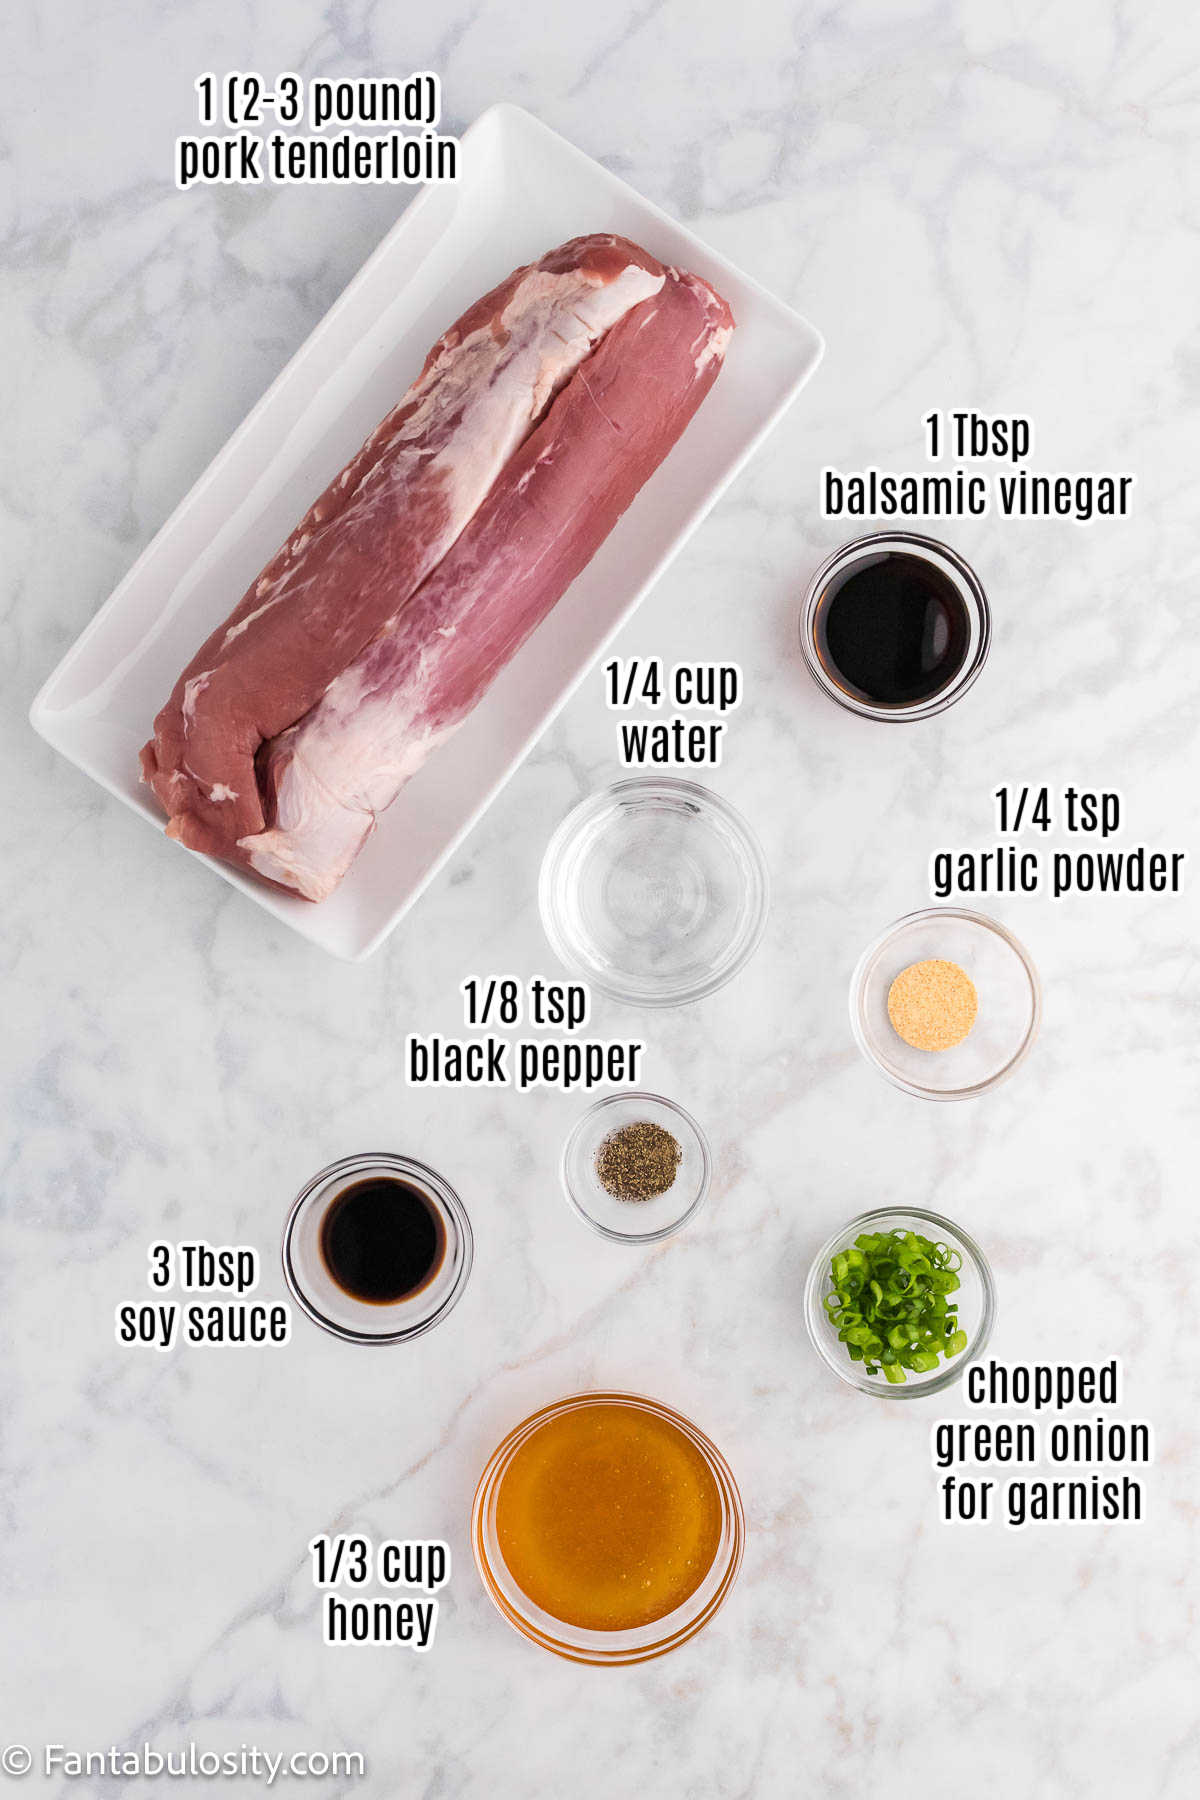 Labeled ingredients for crock pot pork tenderloin.